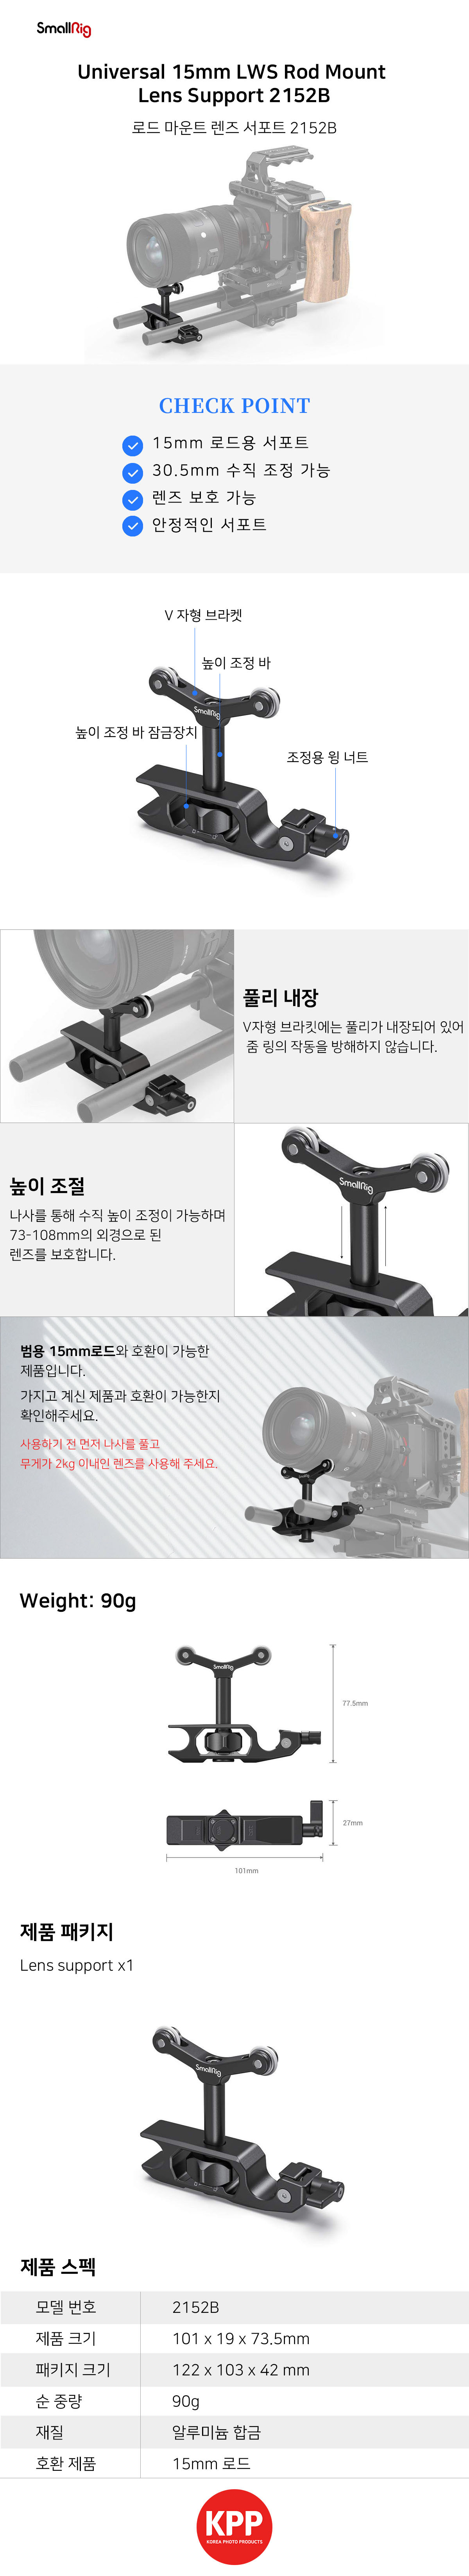 Universal15mm-LWS-Rod-Mount-Lens-Support-2152B-01.jpg